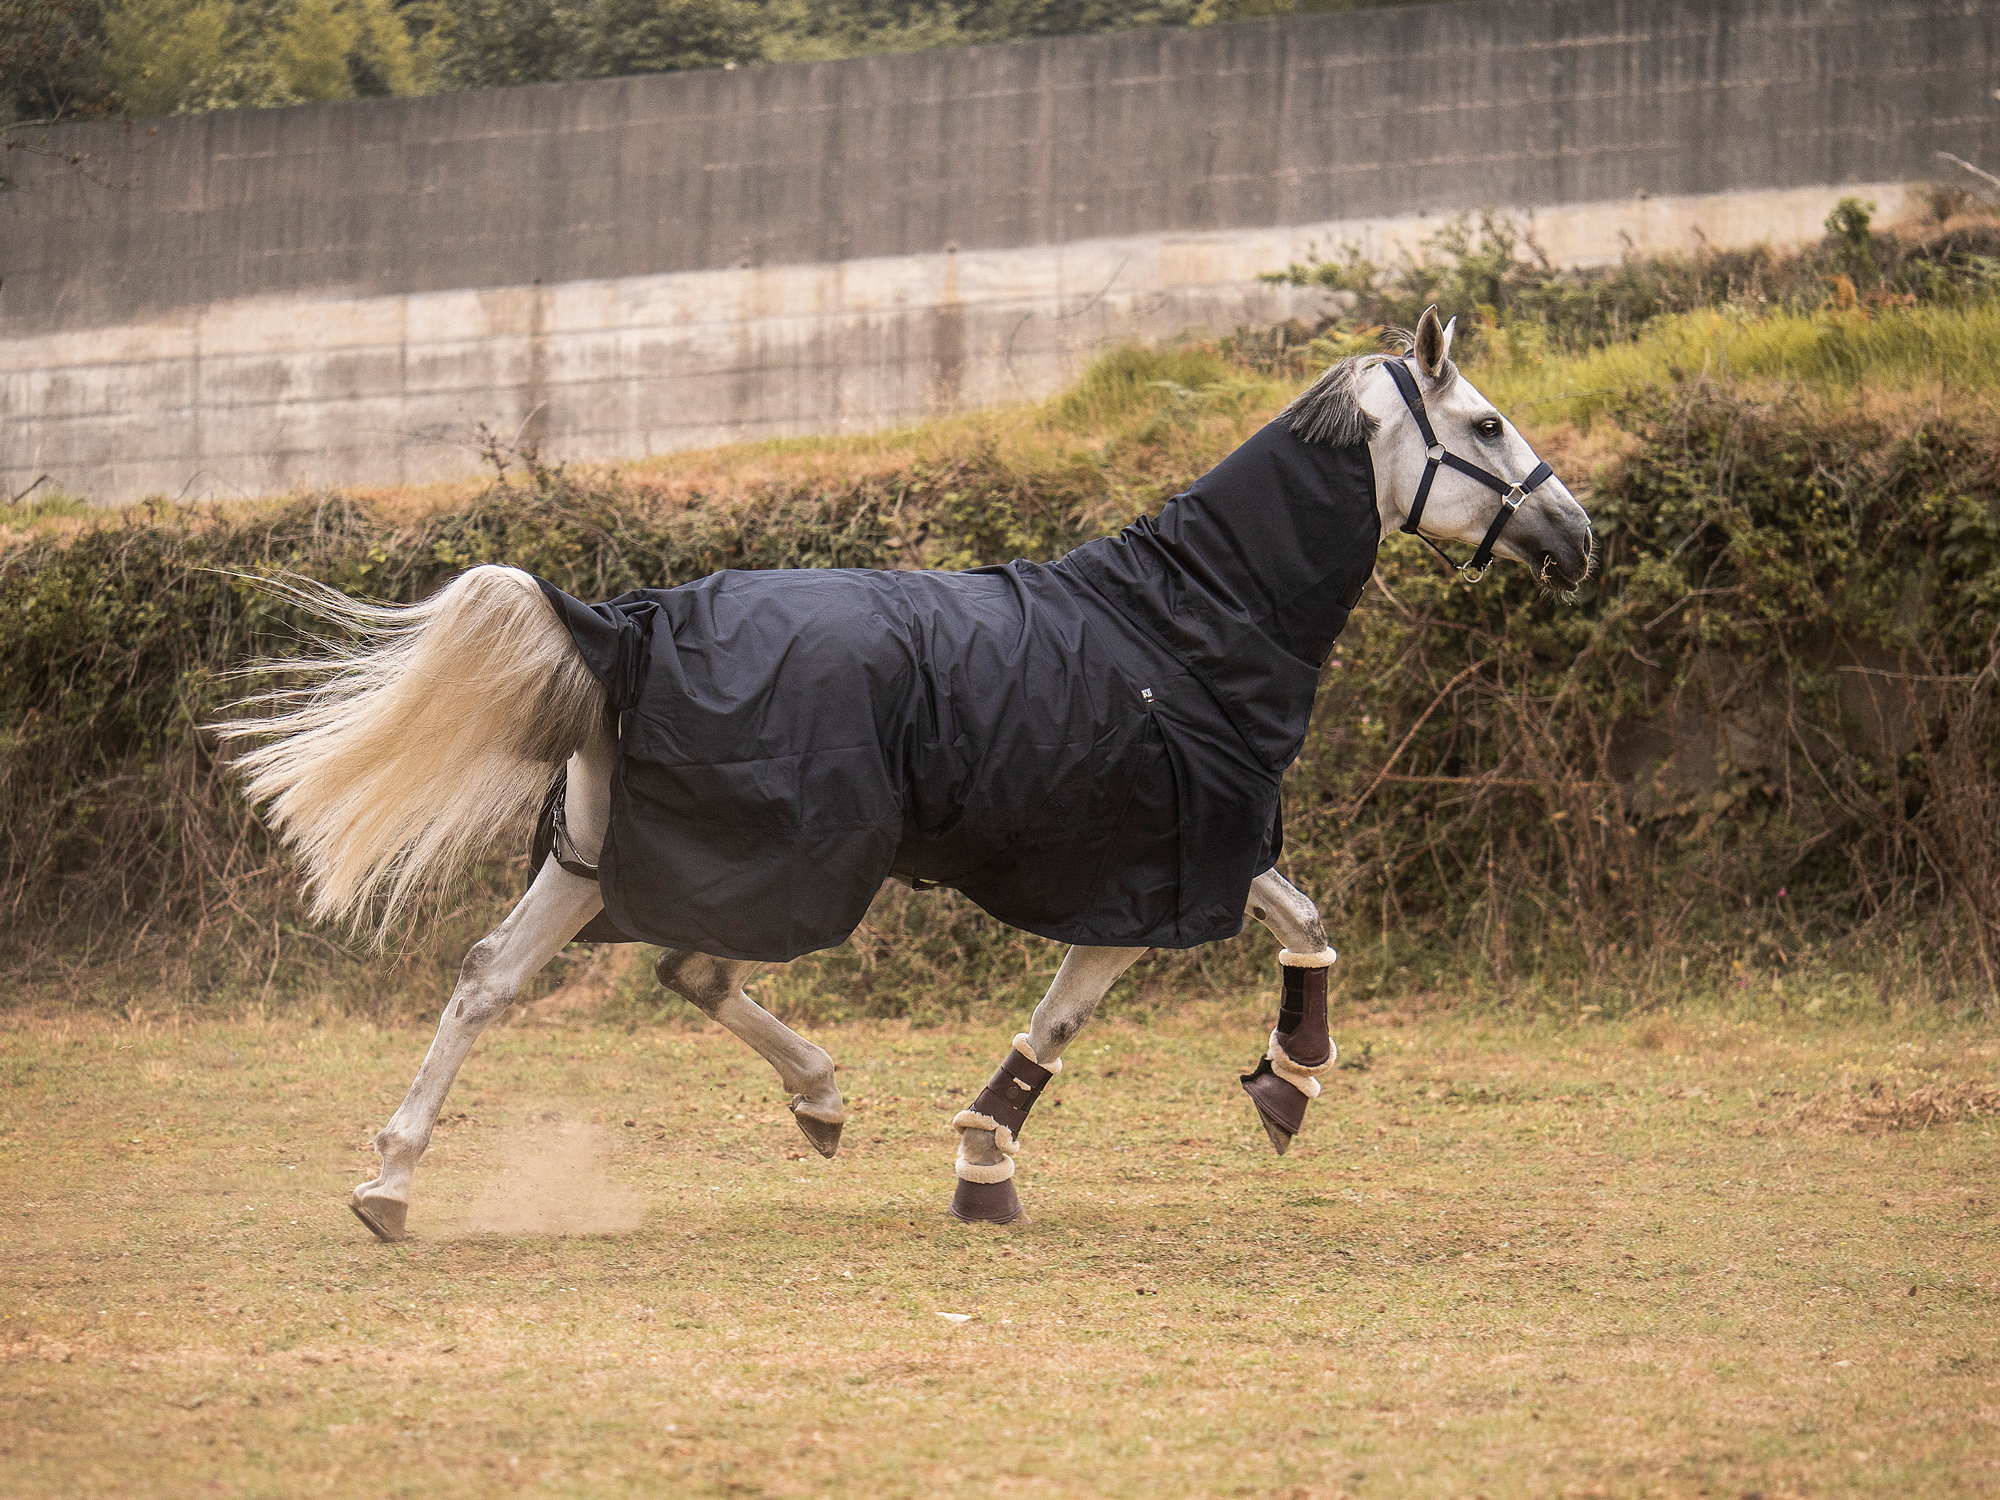 Shop Kingsland horse wear online here – Page 2 – Kingsland Equestrian